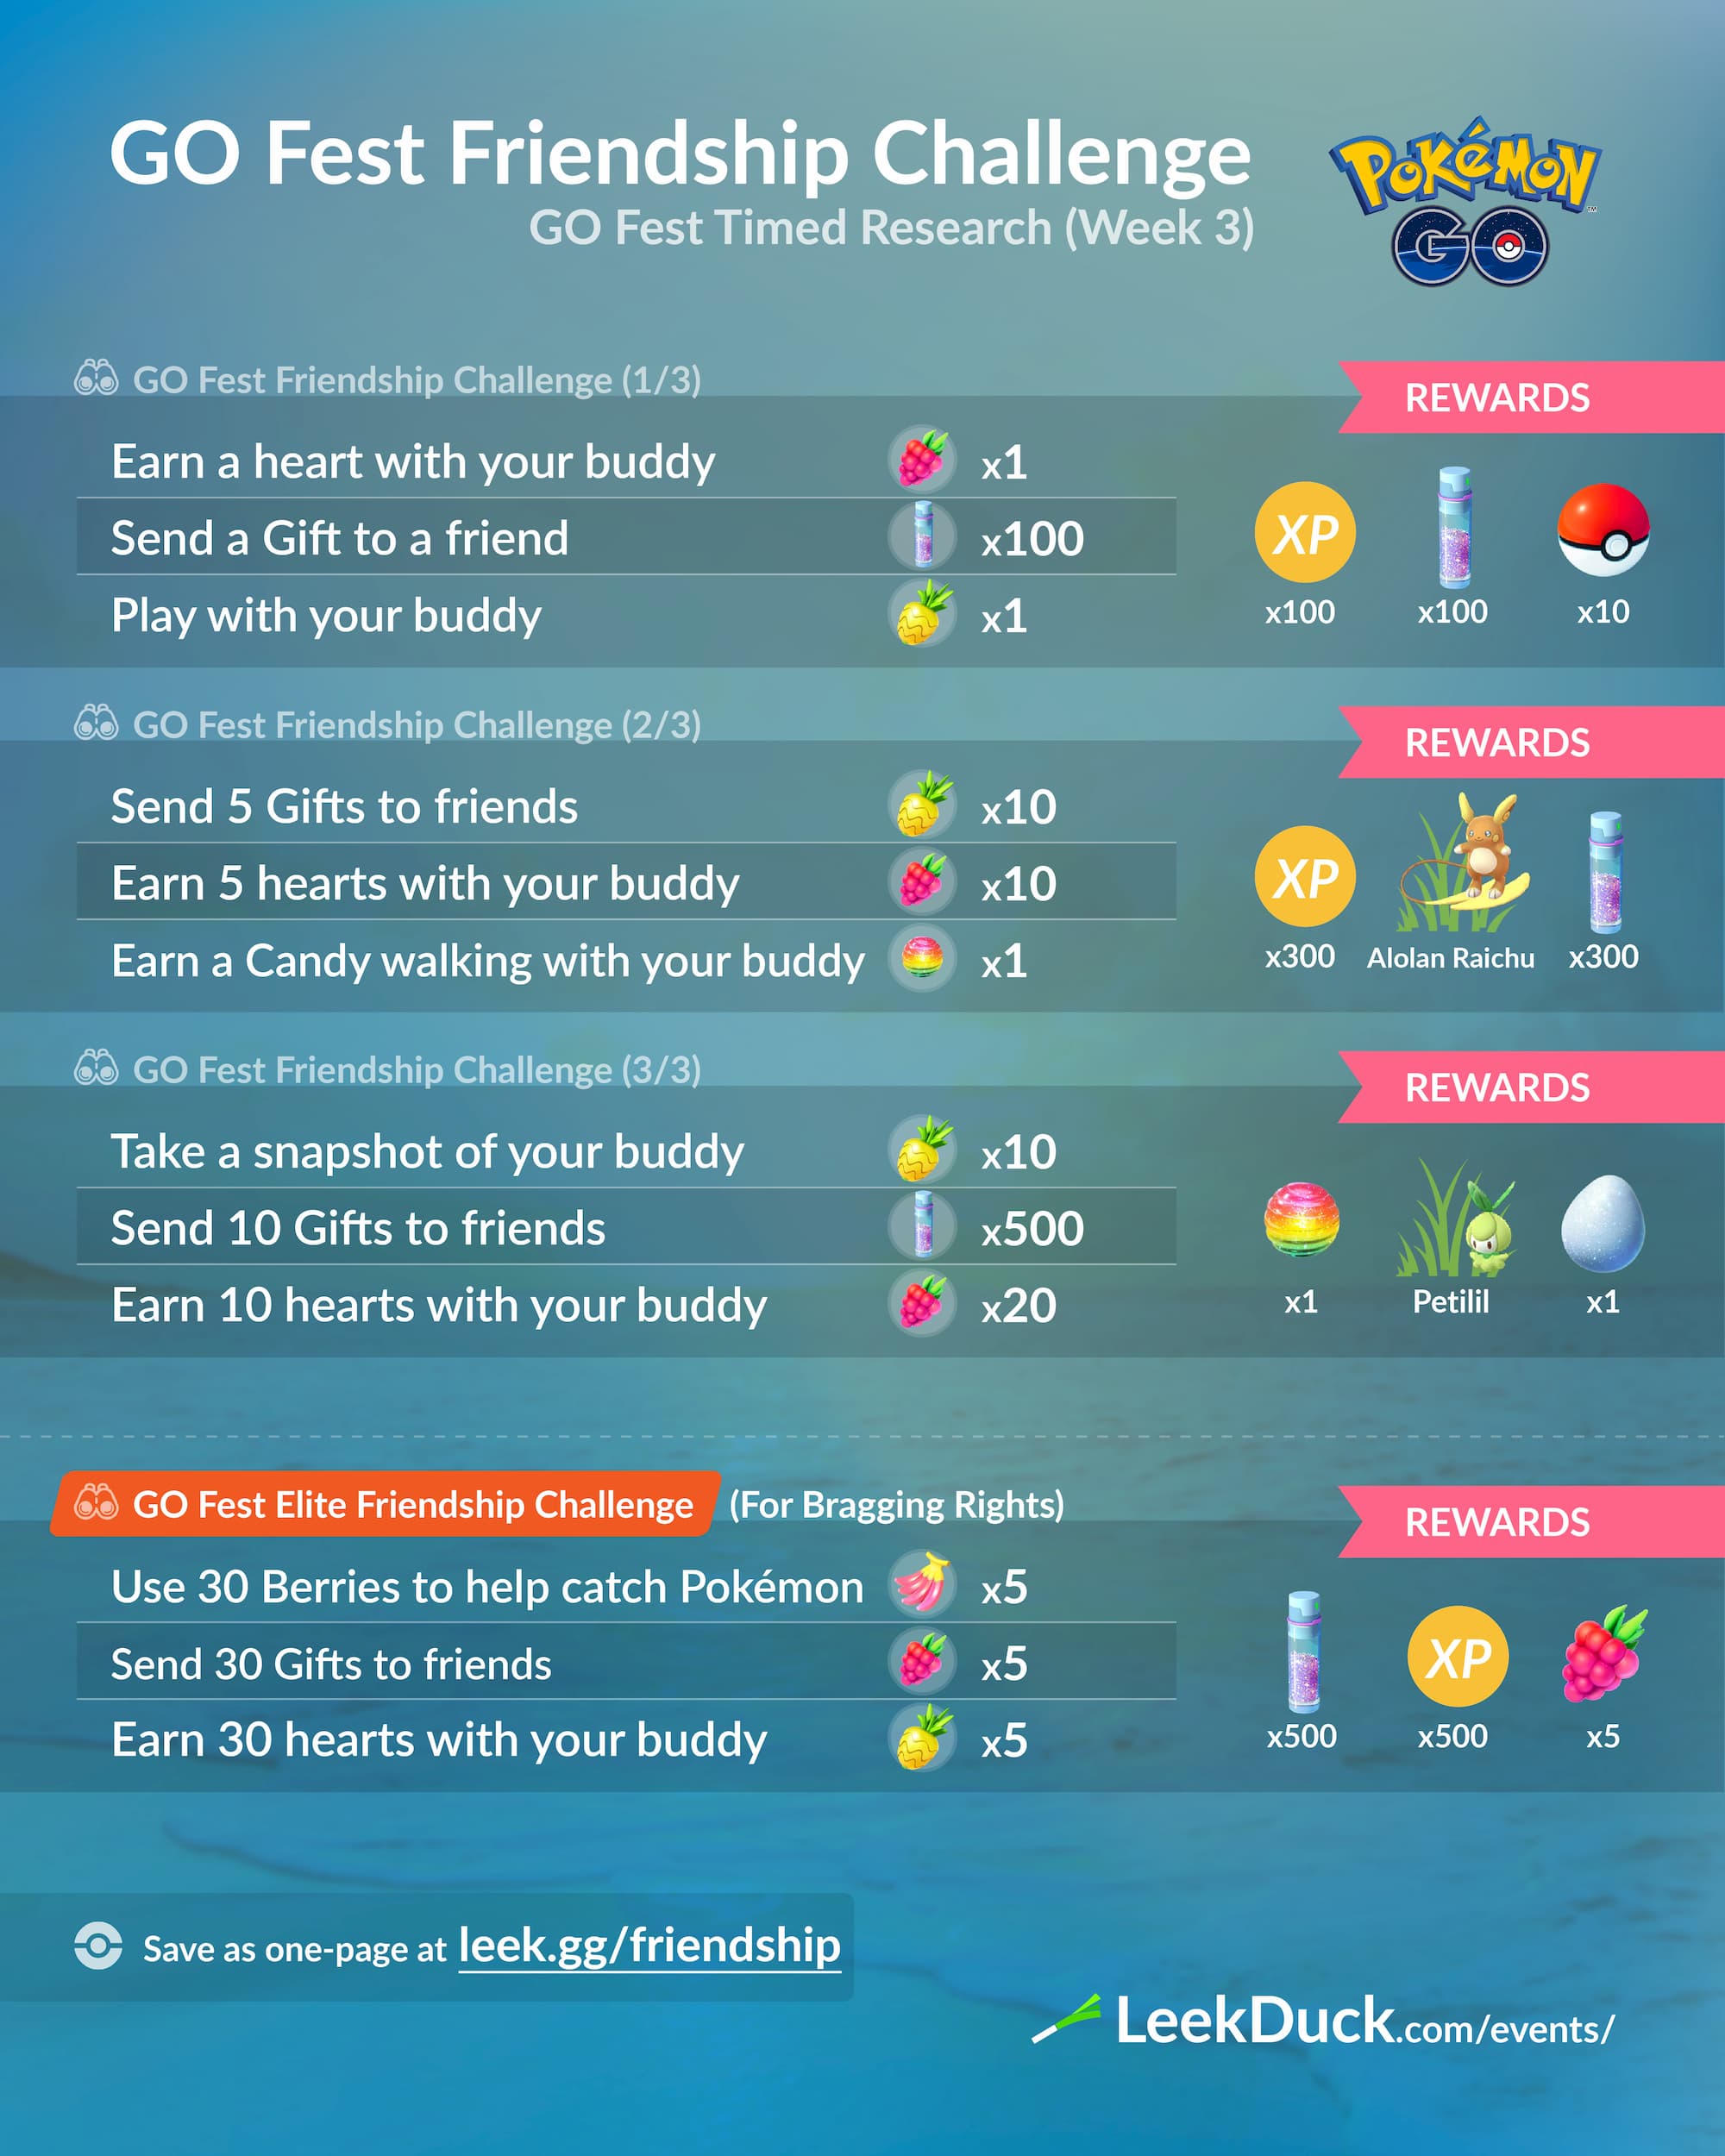 GO Week 3 Friendship - Leek Duck | Pokémon GO News and Resources